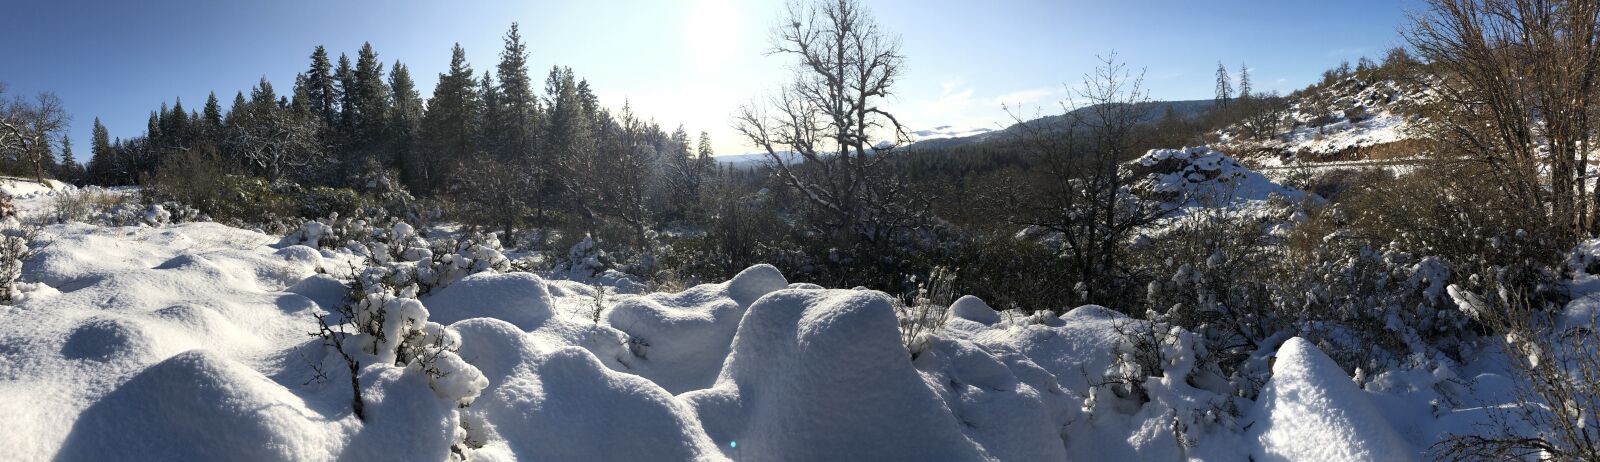 iPhone 8 Plus back camera 3.99mm f/1.8 sample photo. Scenic, winter, landscape photography